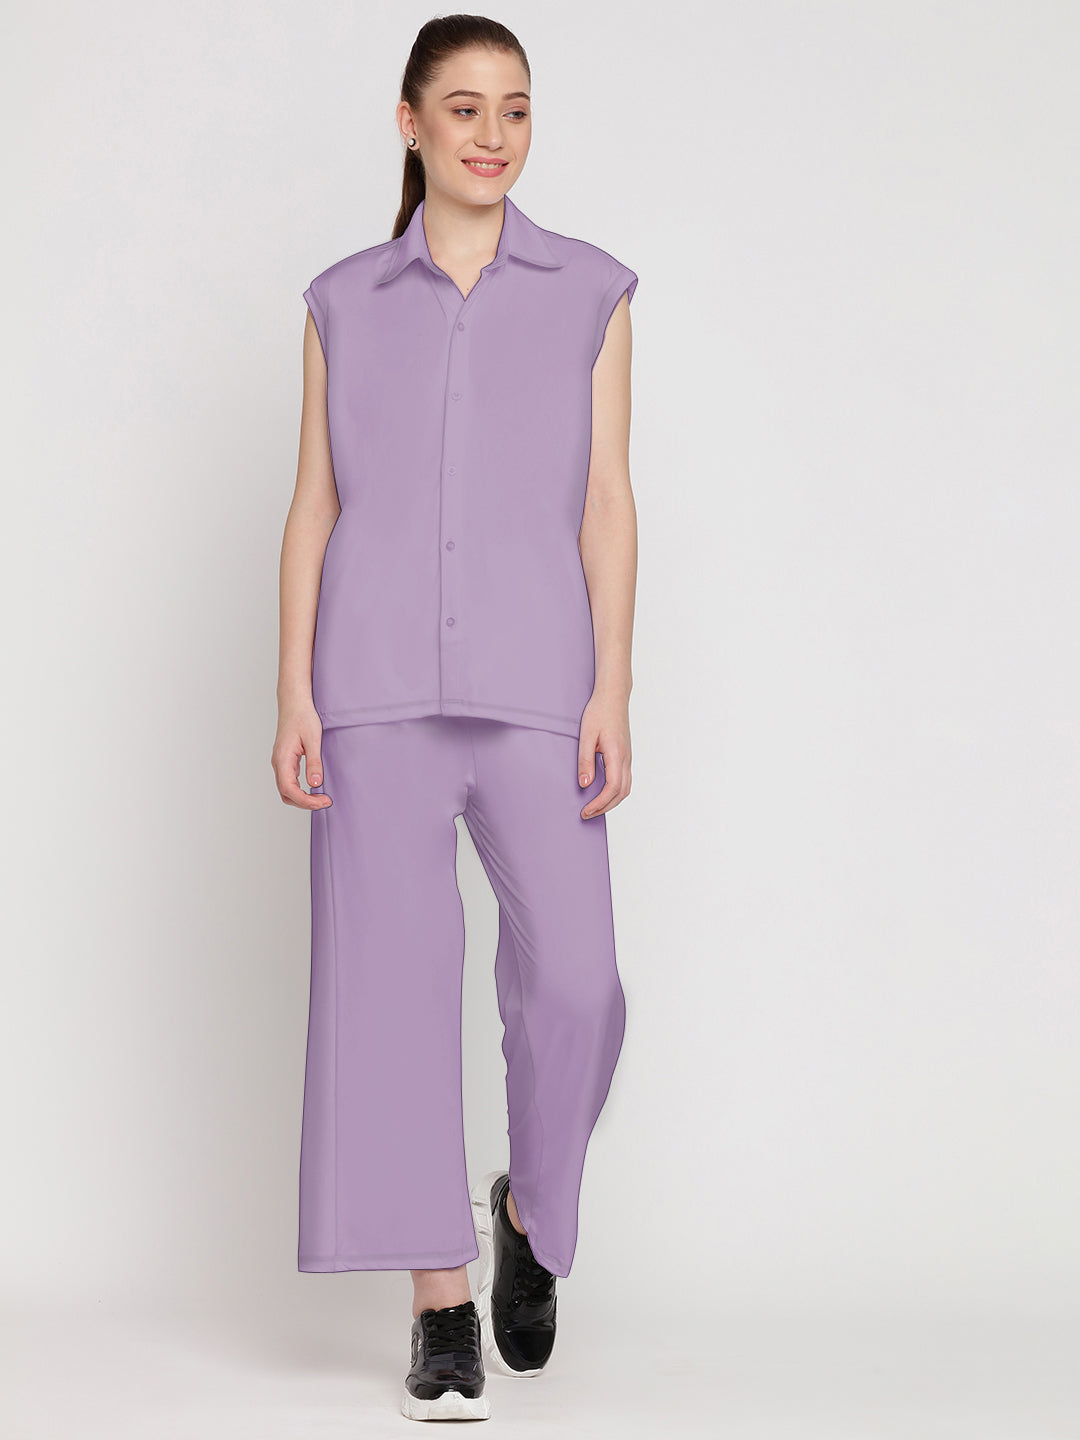 Zen Flow Pants & Shirt Set - Miami Purple